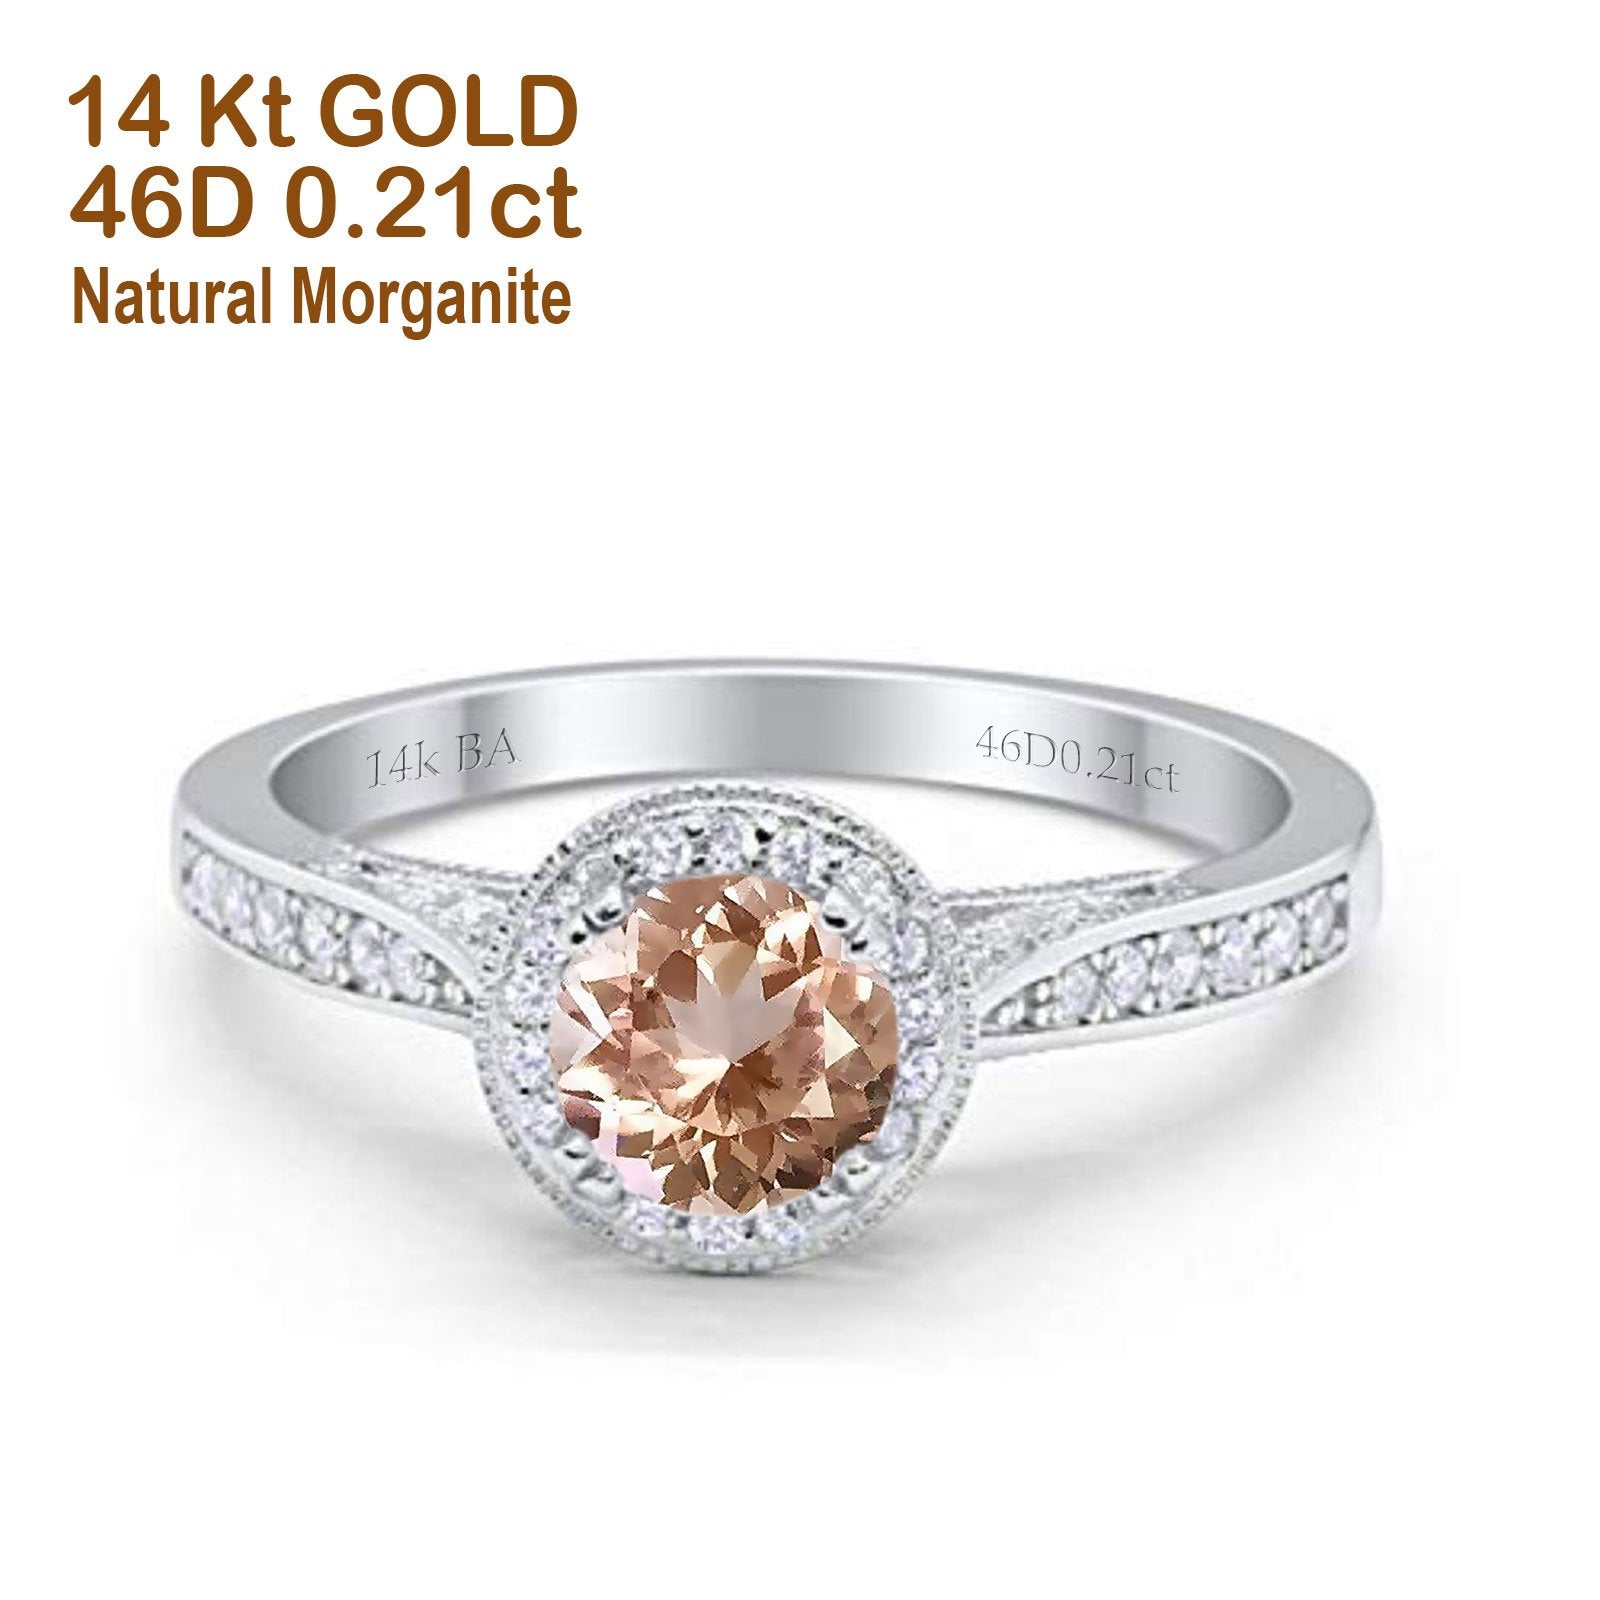 14K White Gold 0.67ct Round Halo 6.5mm G SI Natural Morganite Diamond Engagement Wedding Ring Size 6.5